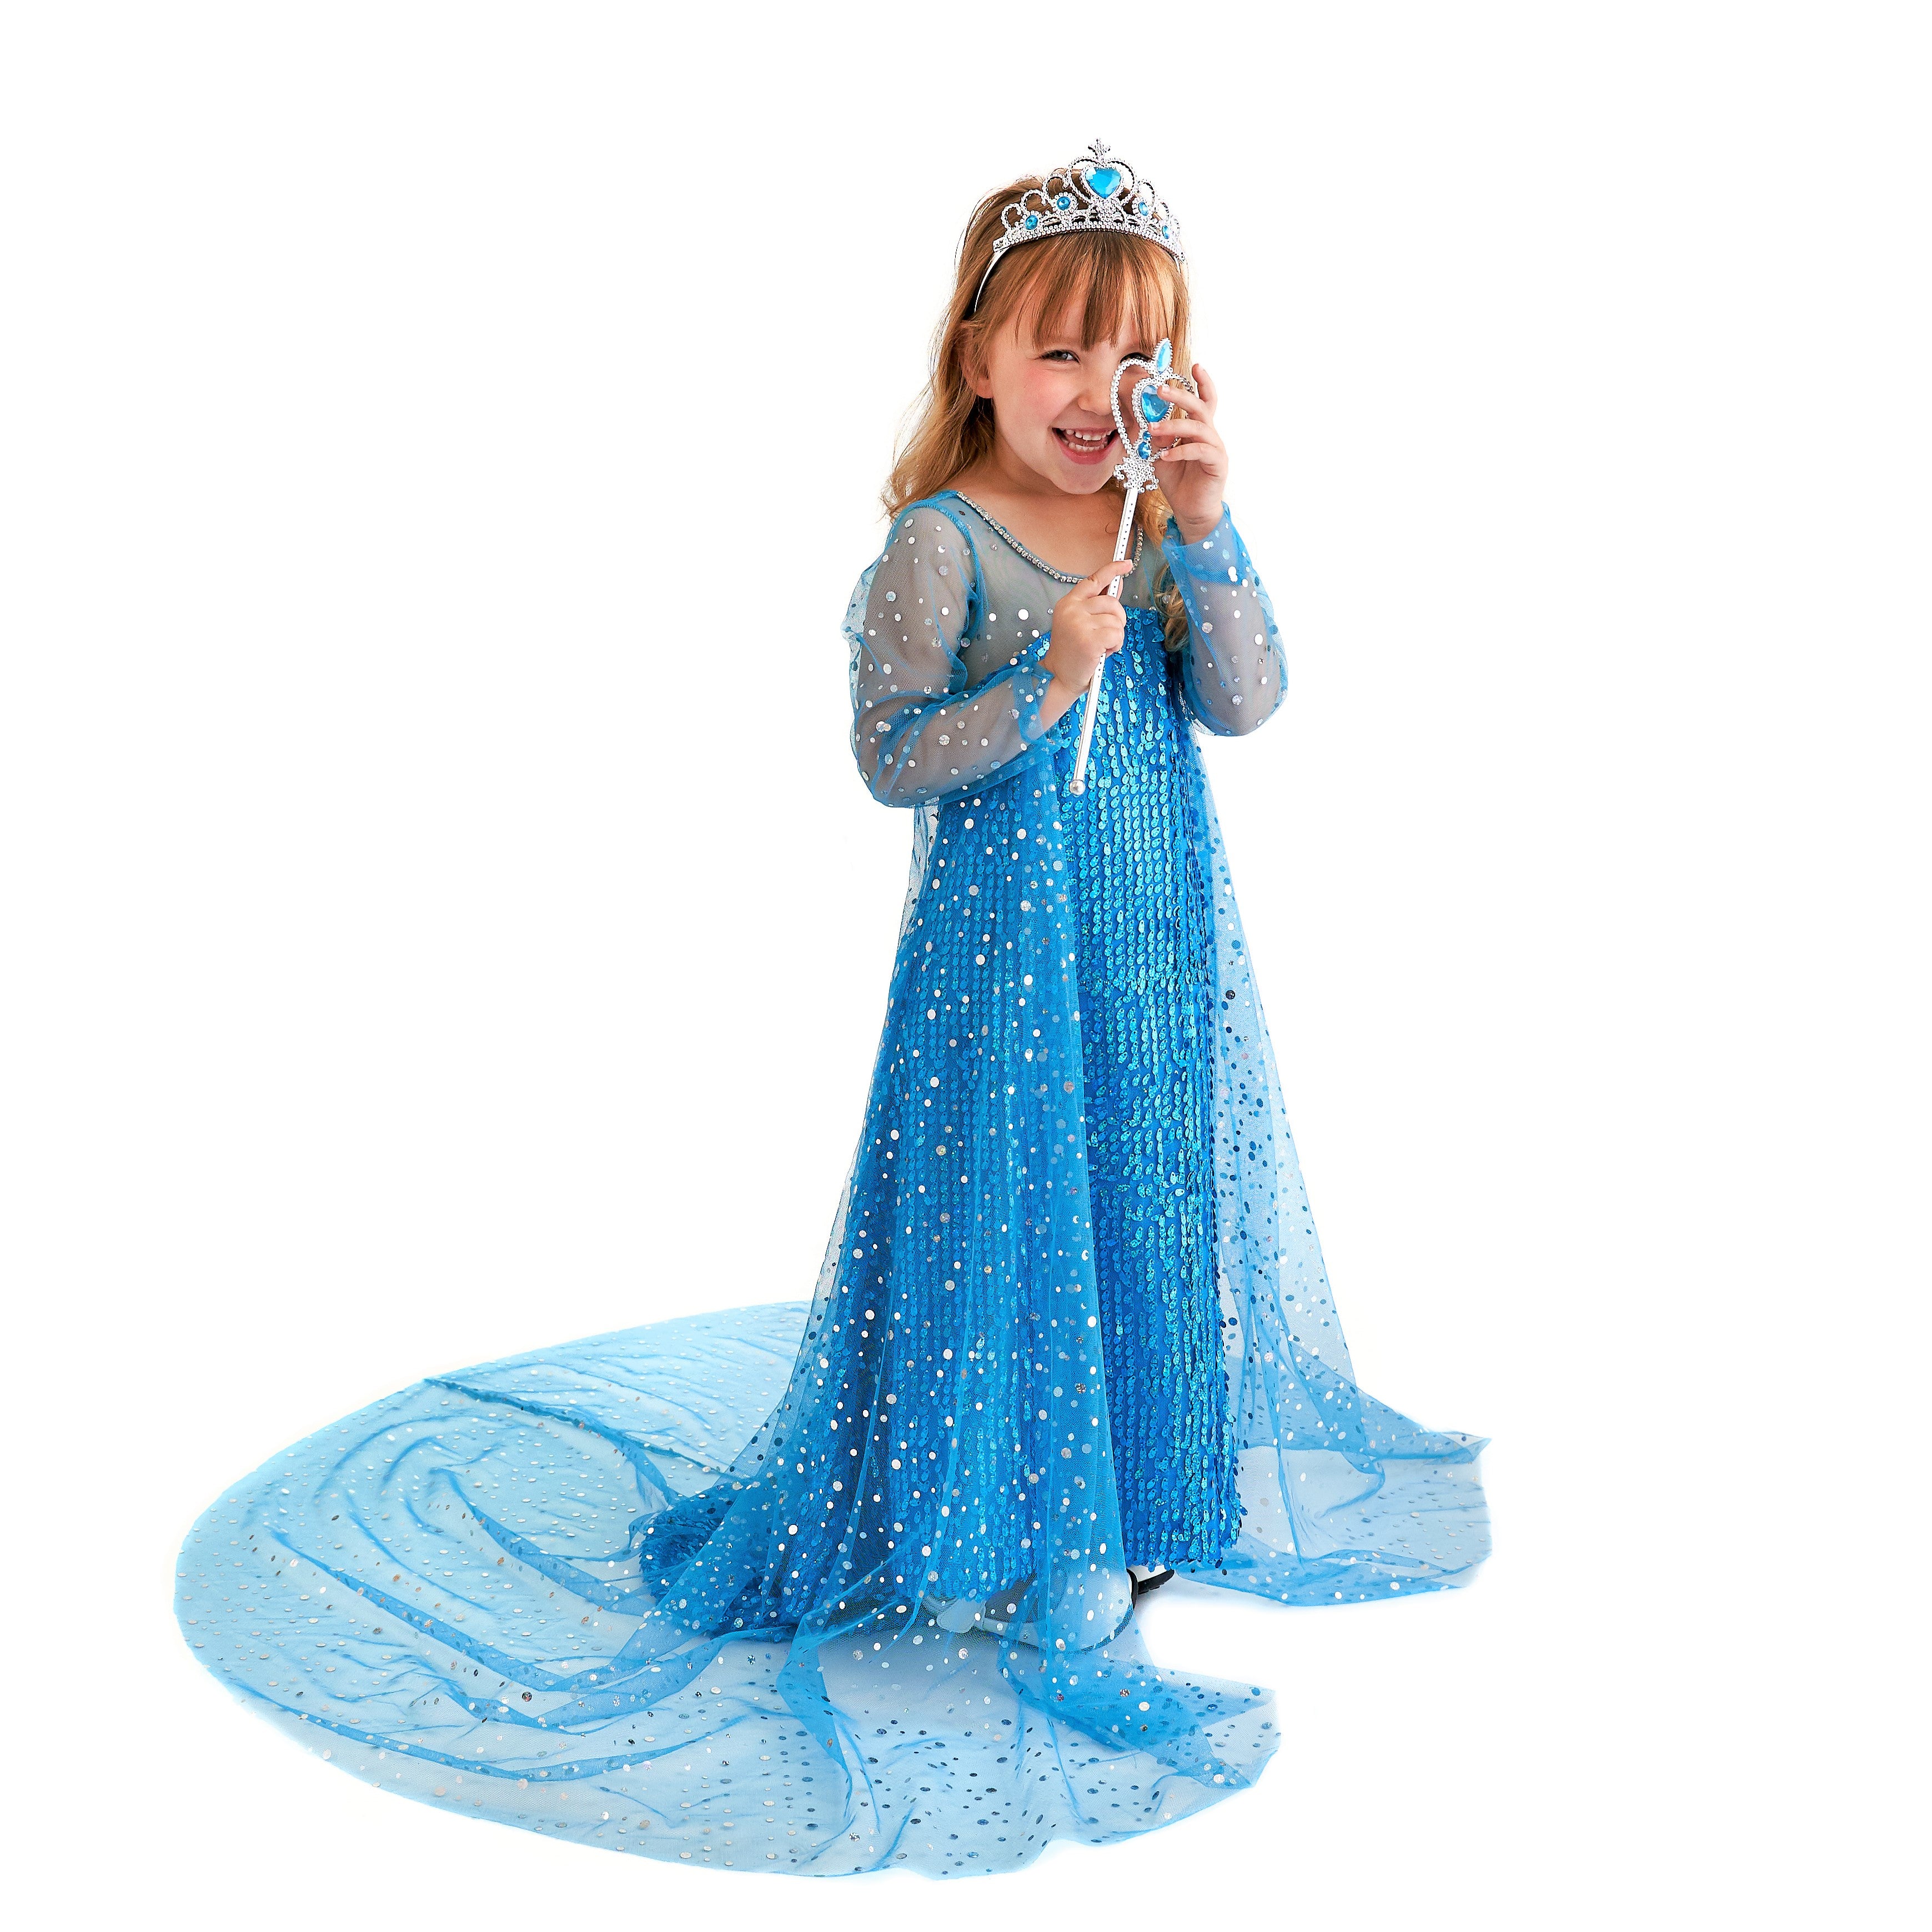 frozen elsa dress for 4 year old